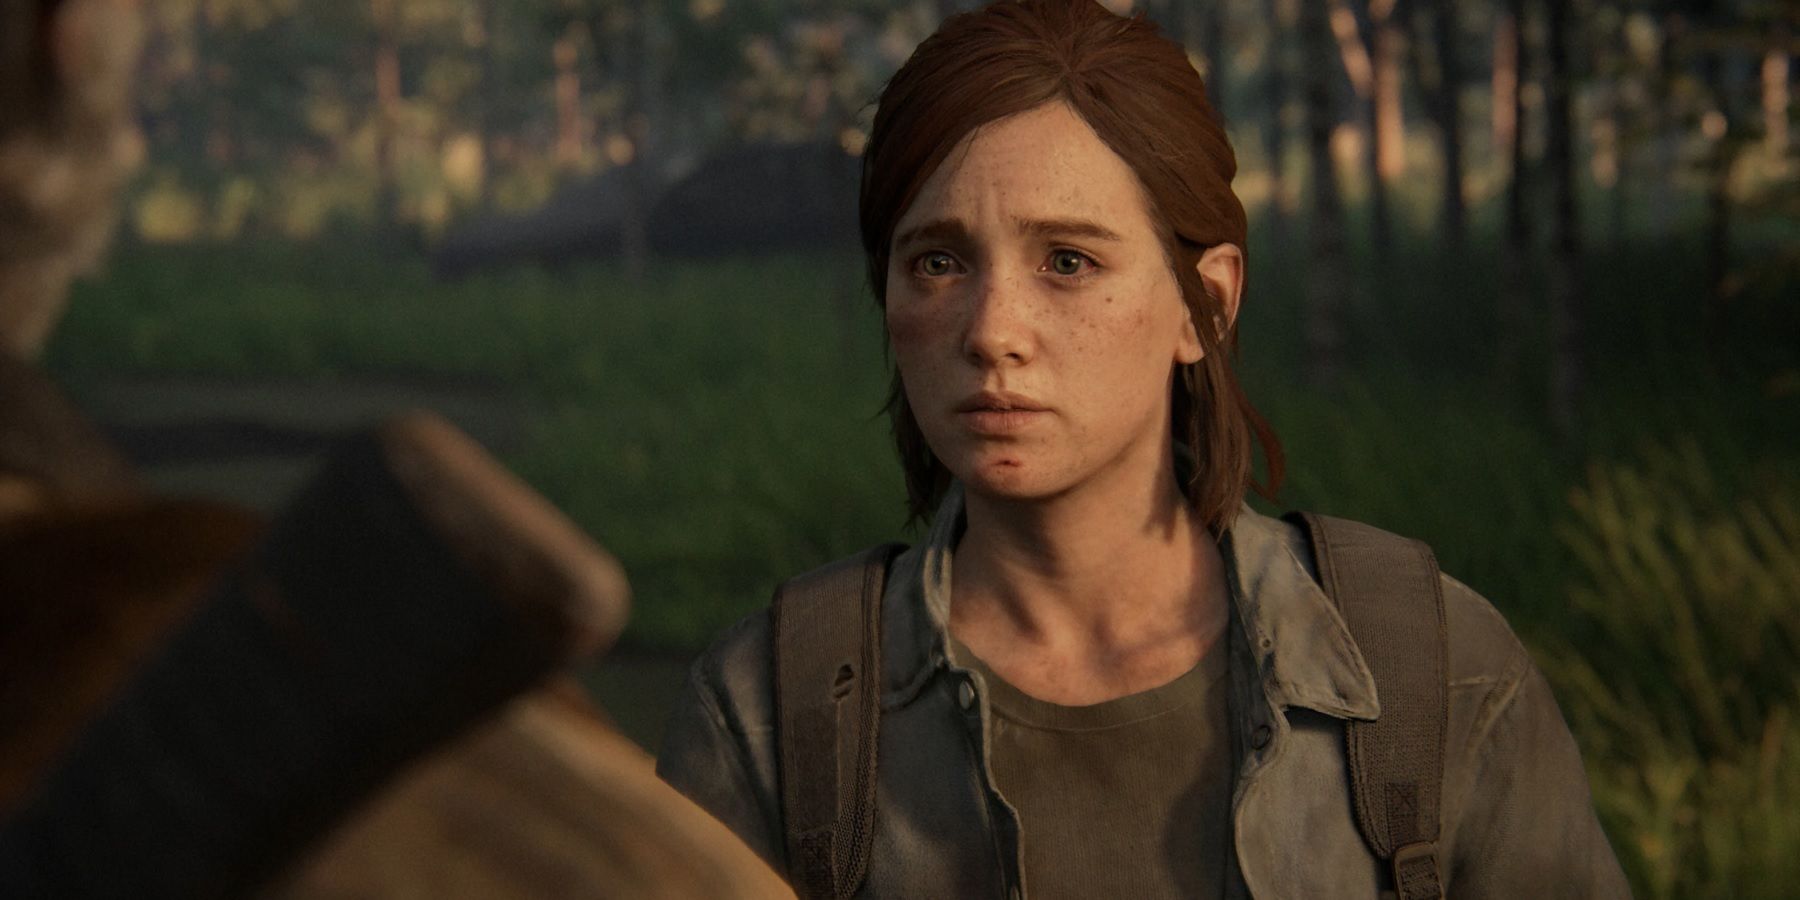 The Last of Us Part 3: Story rumors, Naughty Dog leaks & more - Dexerto